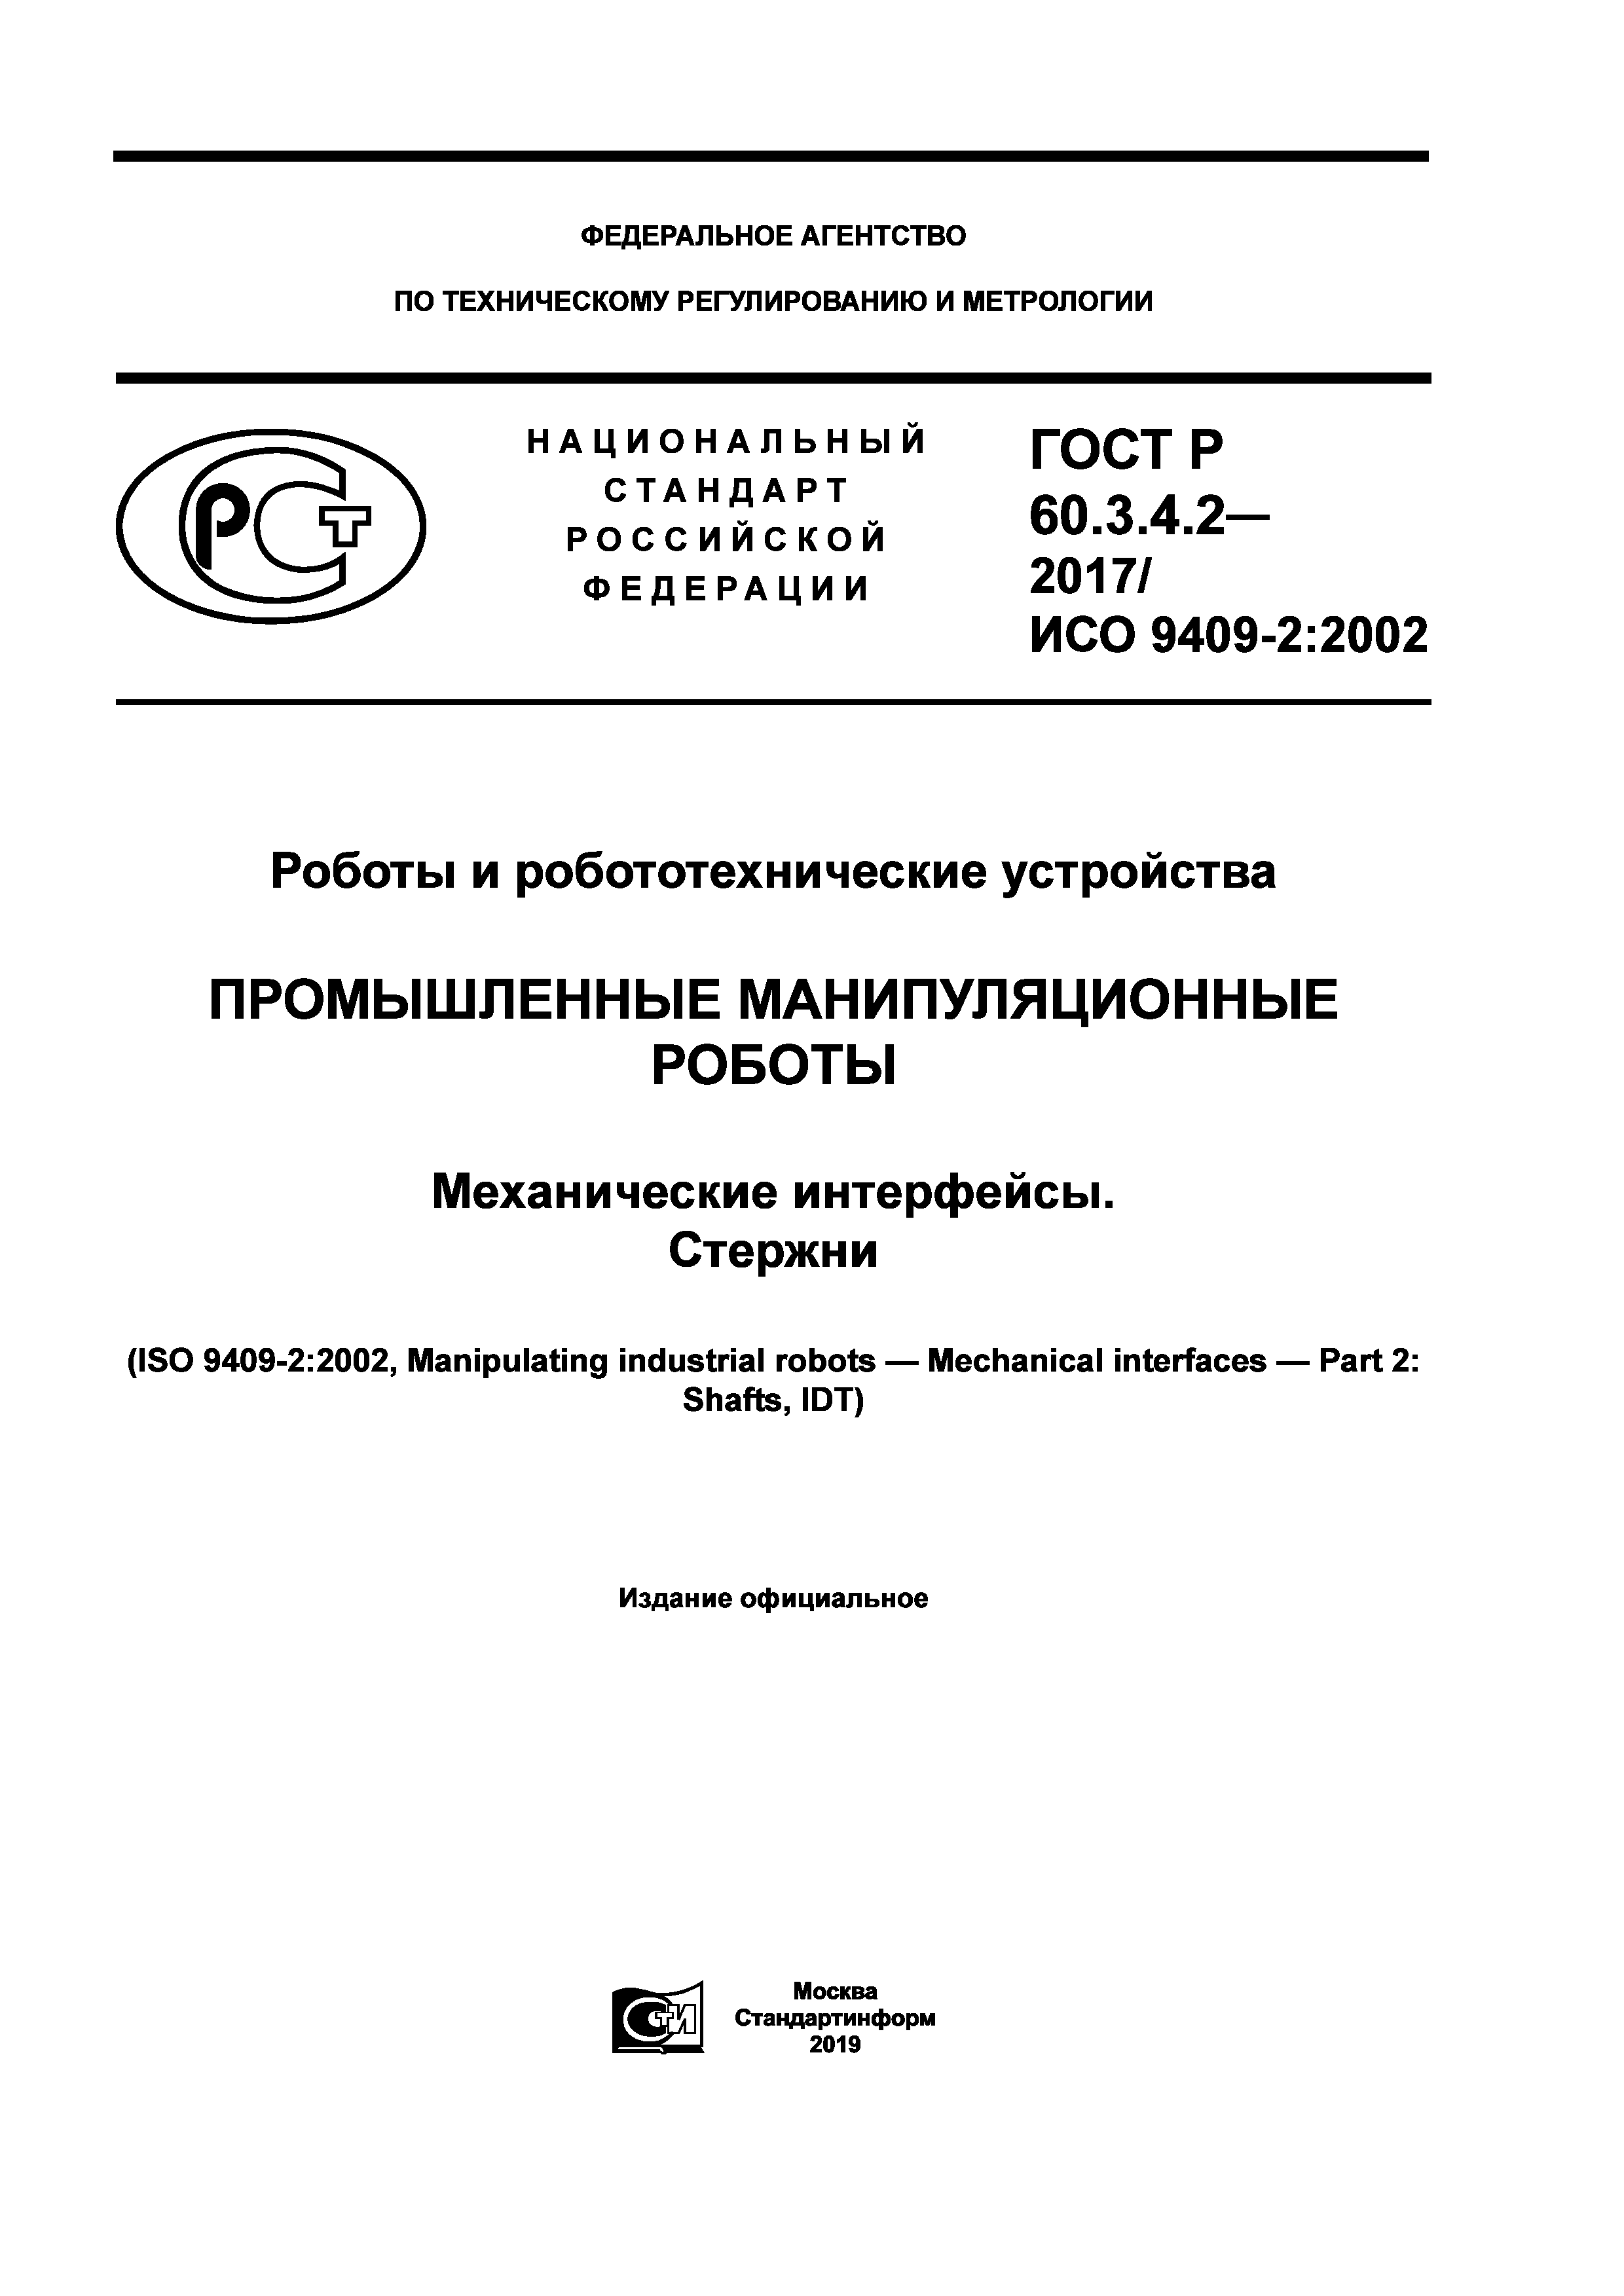 ГОСТ Р 60.3.4.2-2017